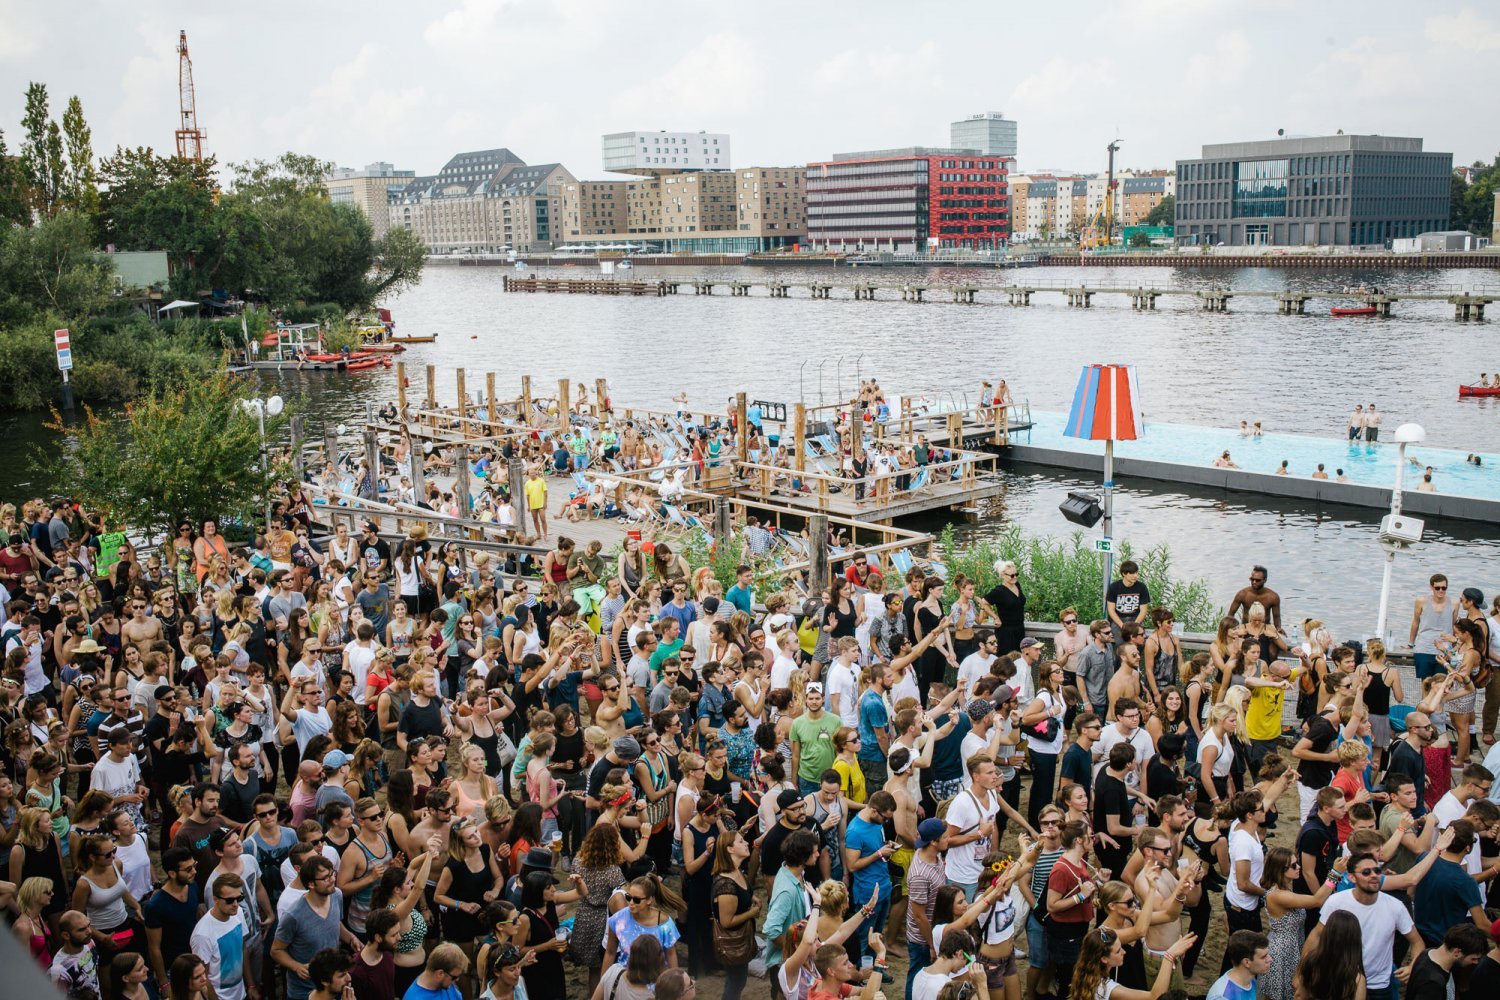 festival berlin